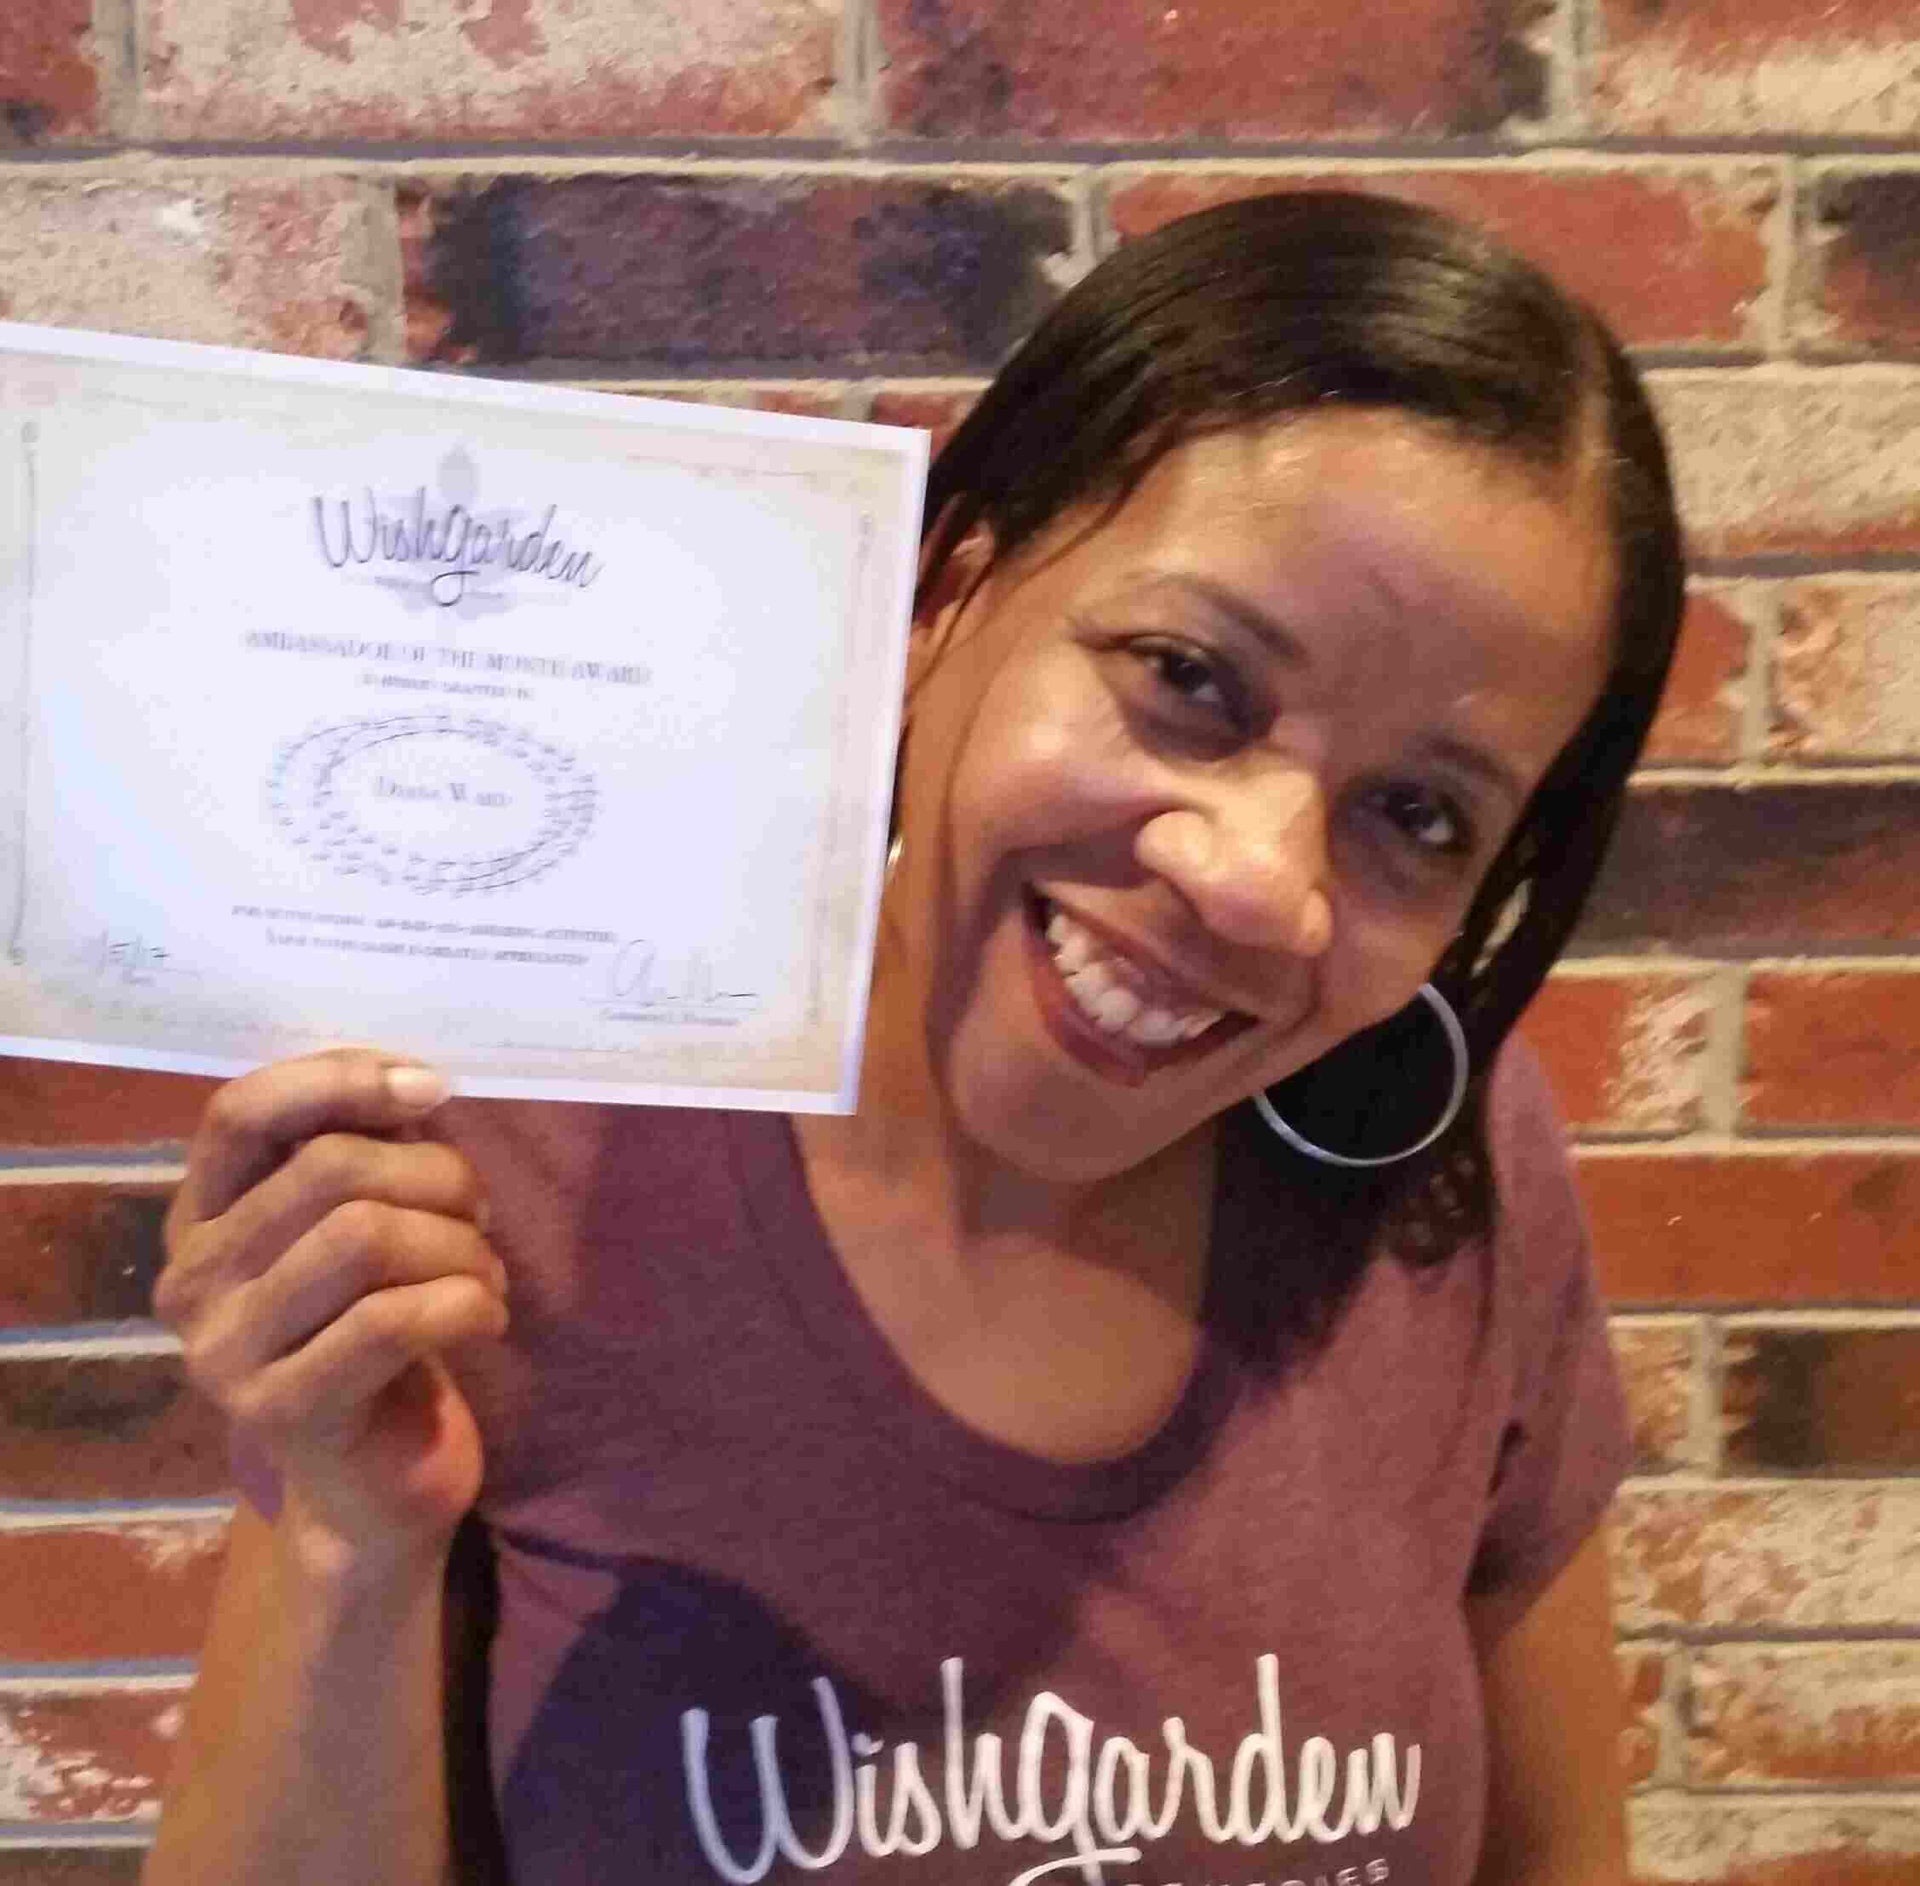 WishGarden Ambassador of the Month: Diana Ward